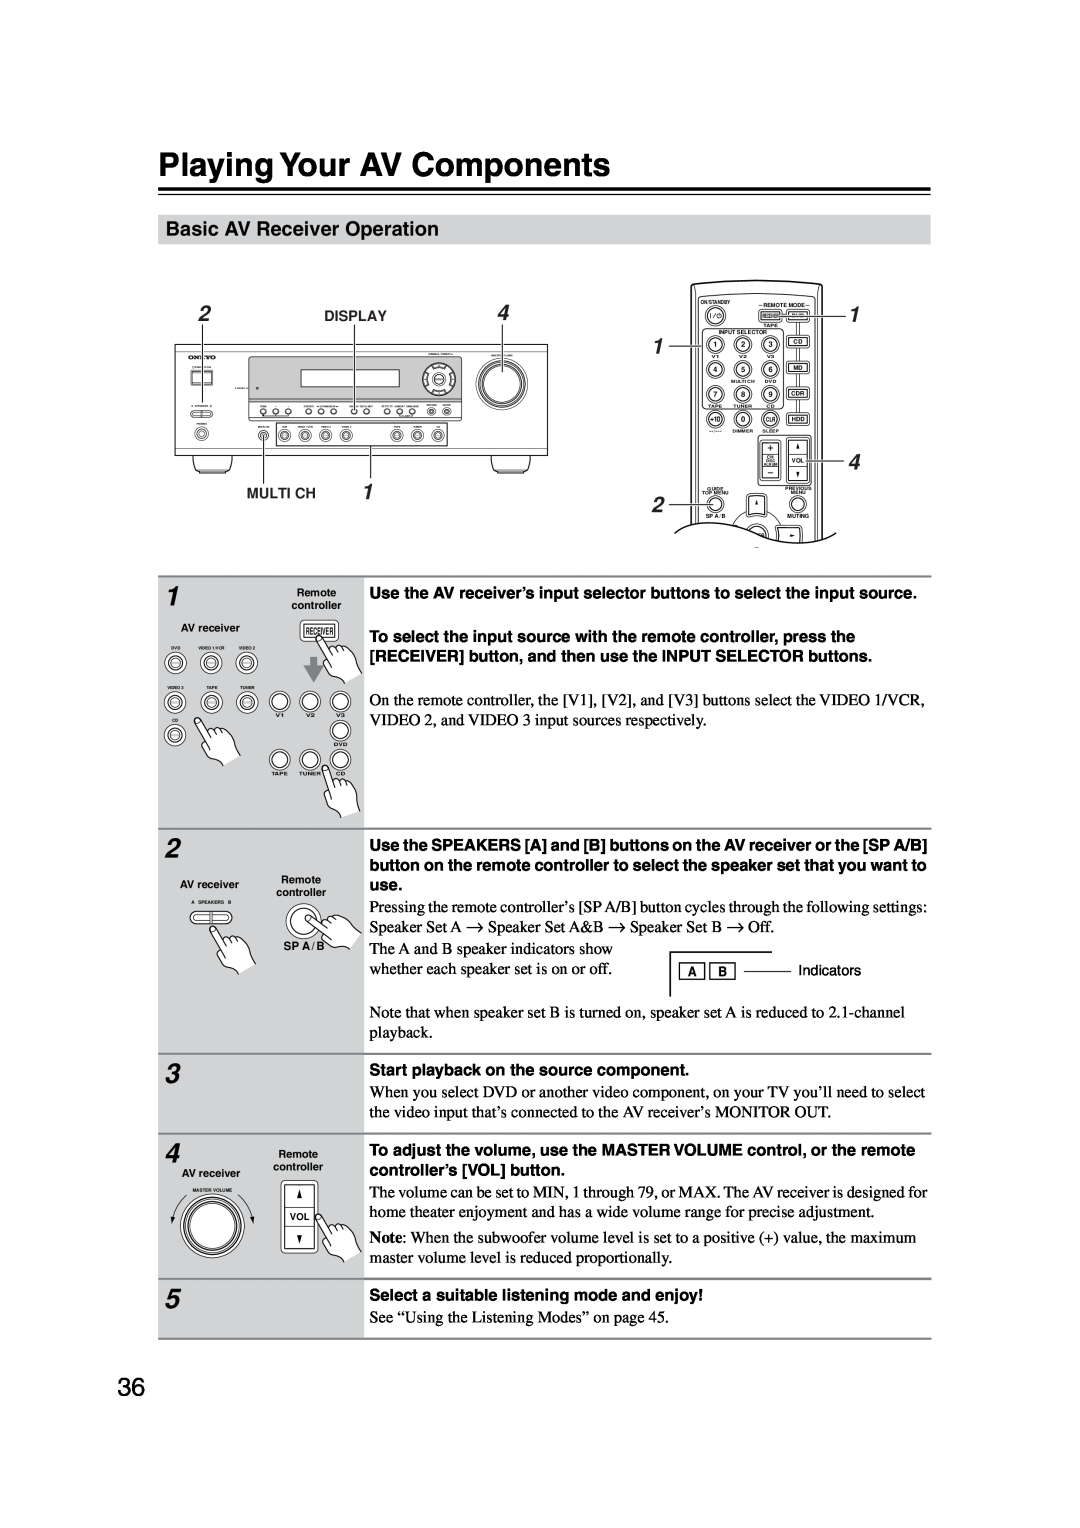 Onkyo TX-SR304 instruction manual Playing Your AV Components, Basic AV Receiver Operation 